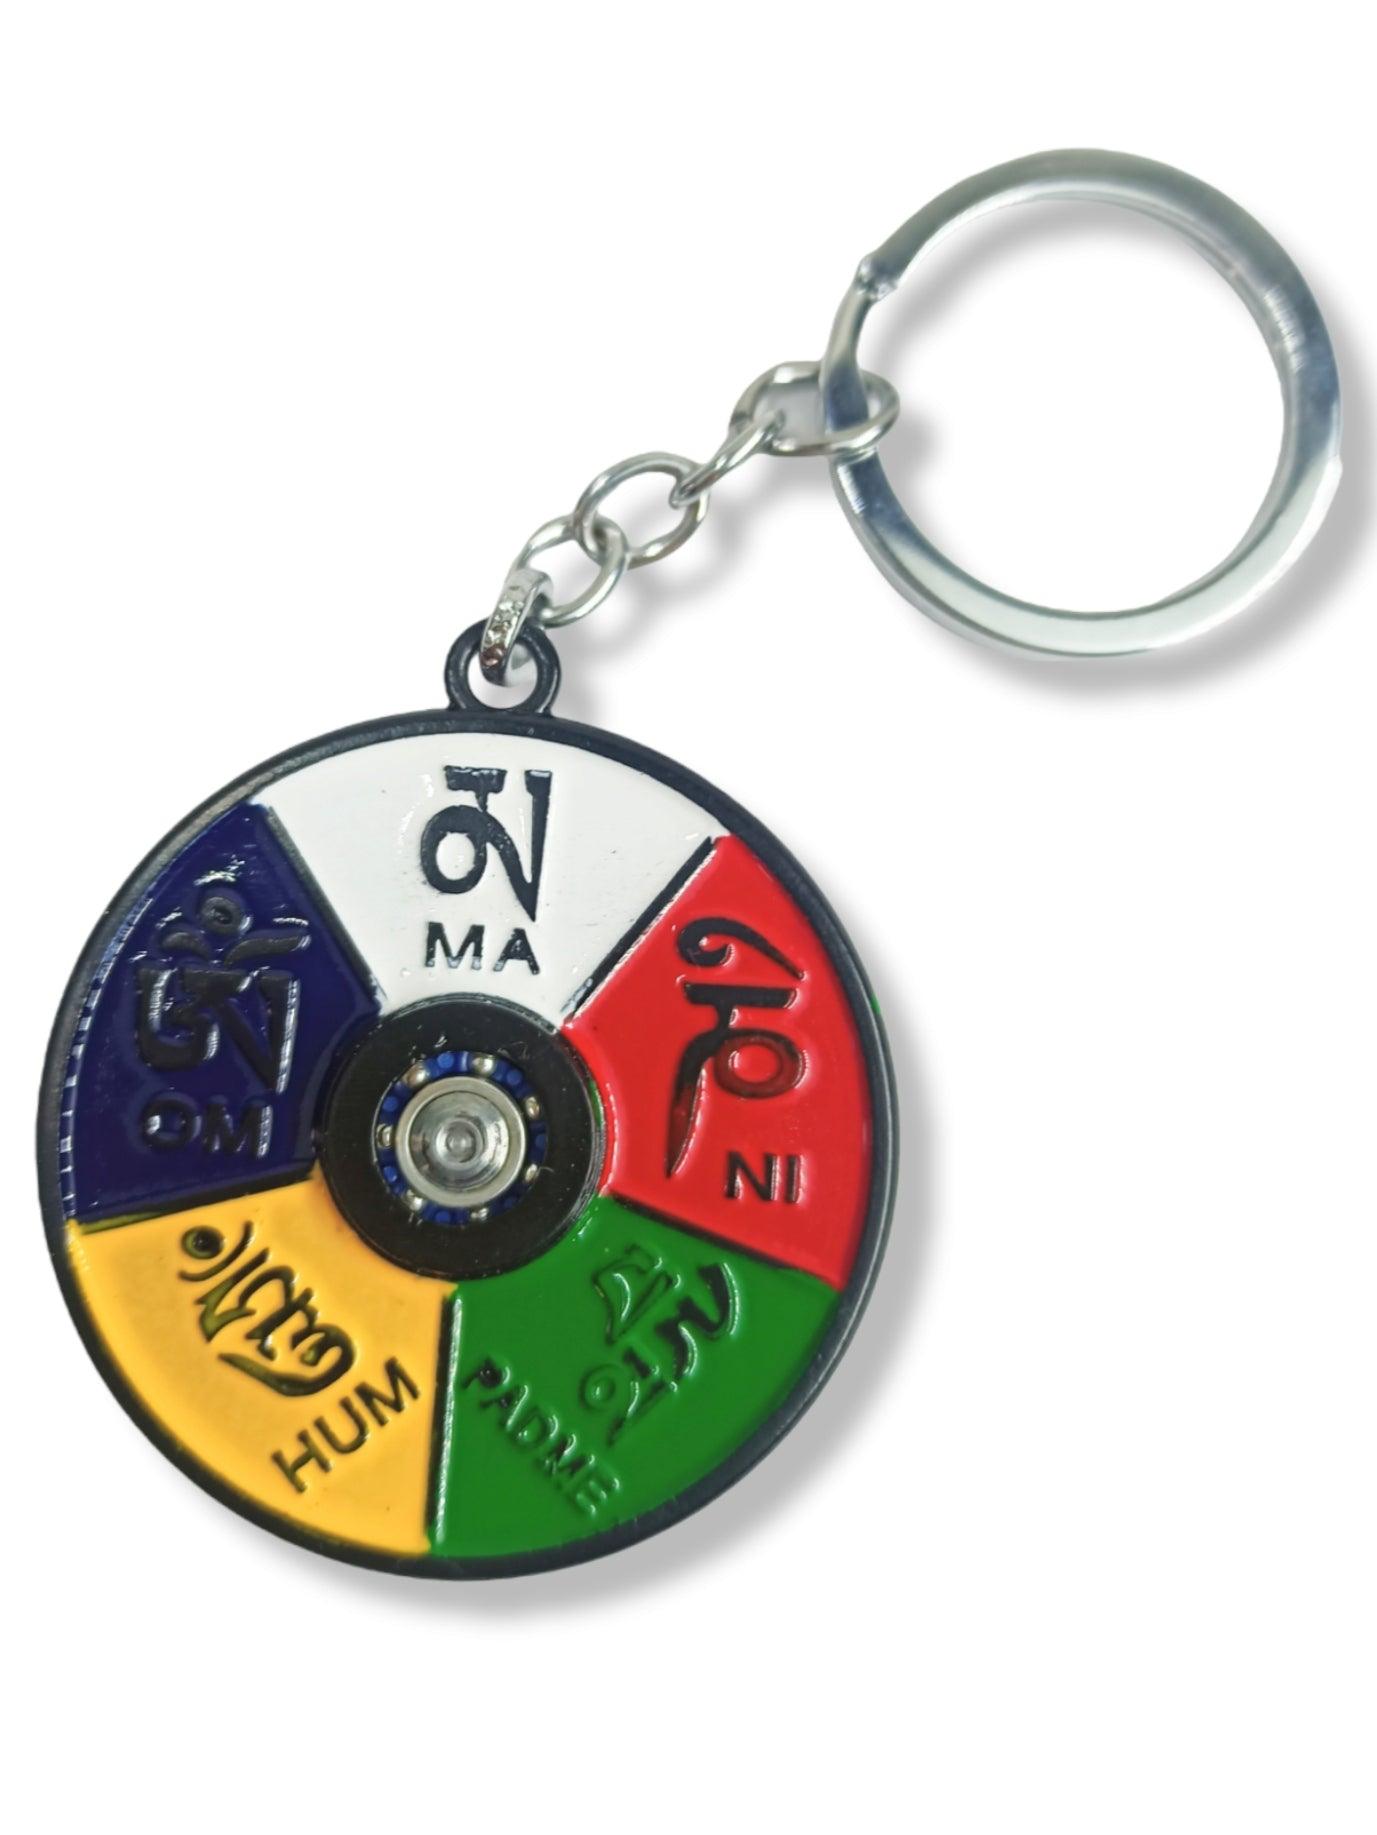 Fidget Spinner Keychain | Julley keychain | Ladakh Souvenirs - ZANSKAR ARTS